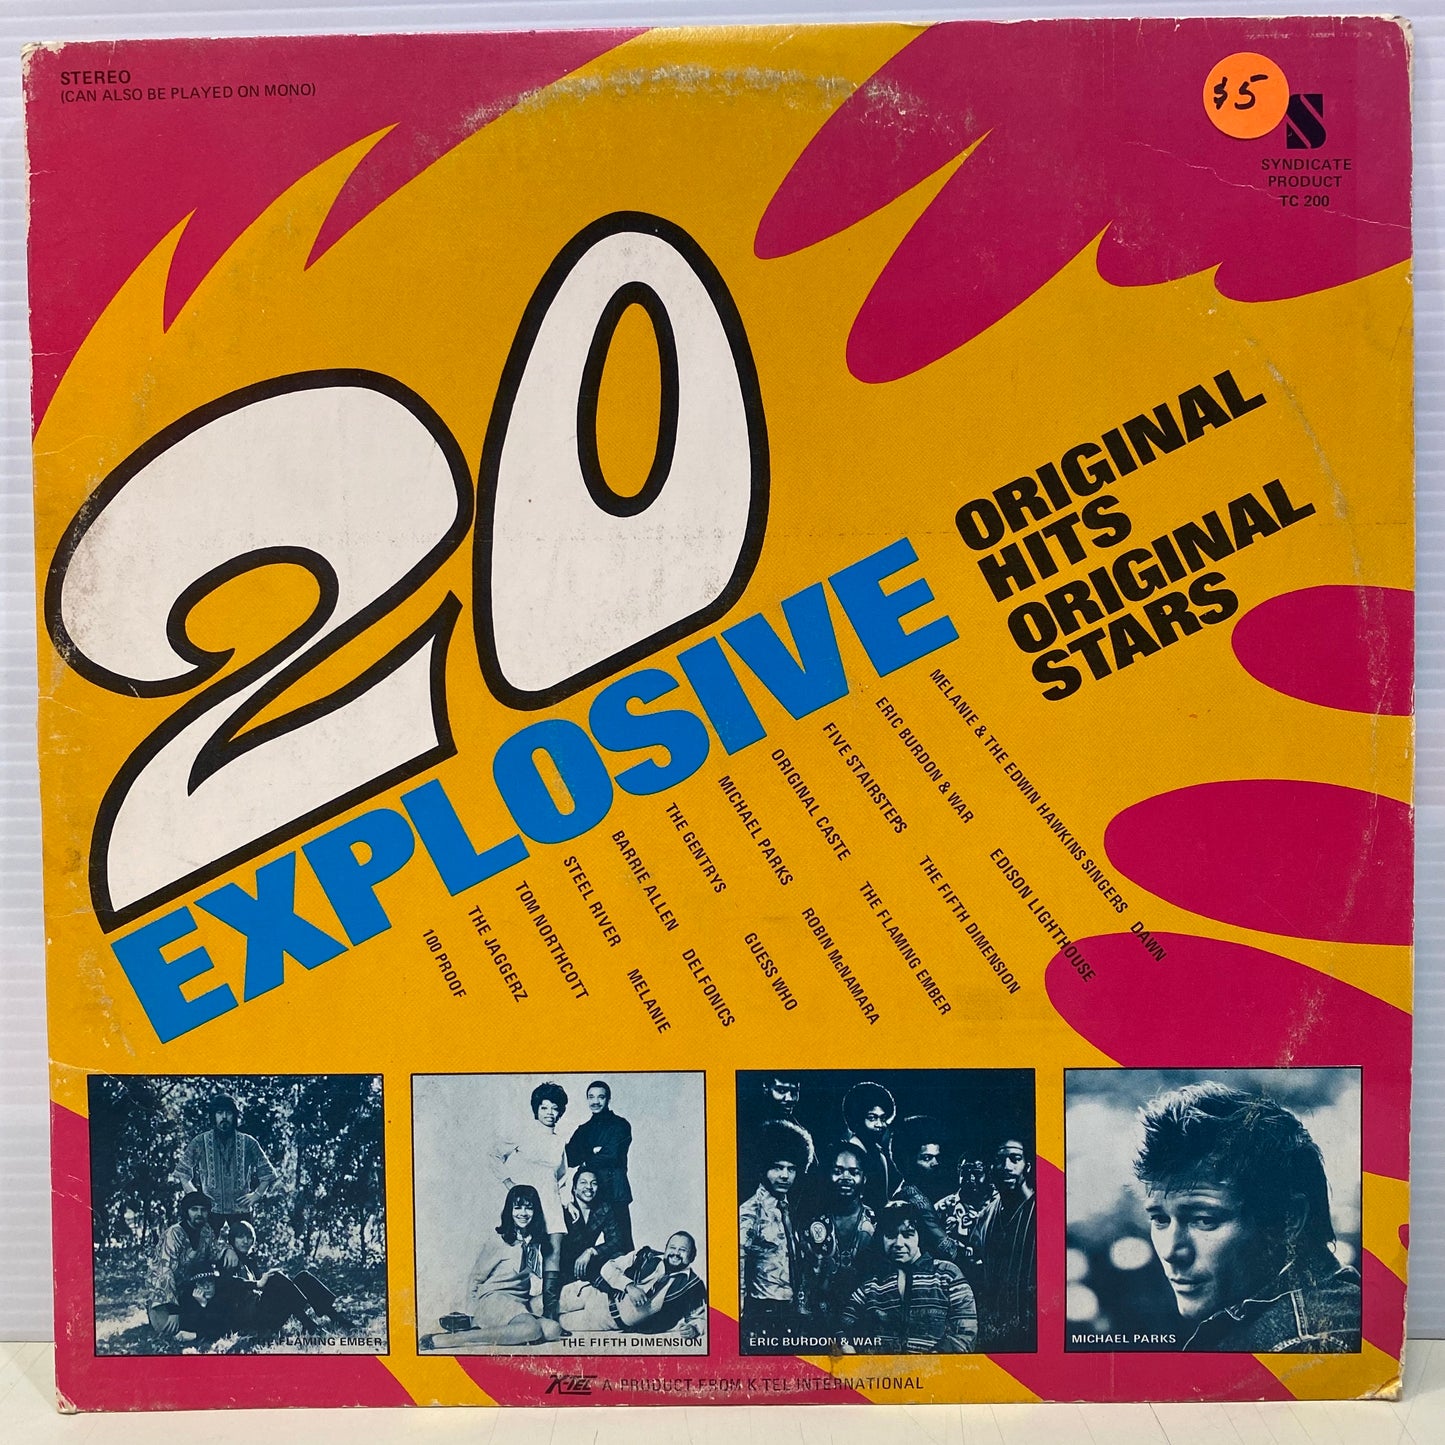 20 Explosive Hits By 20 Original Stars - Various Artists (Open Vinyl)